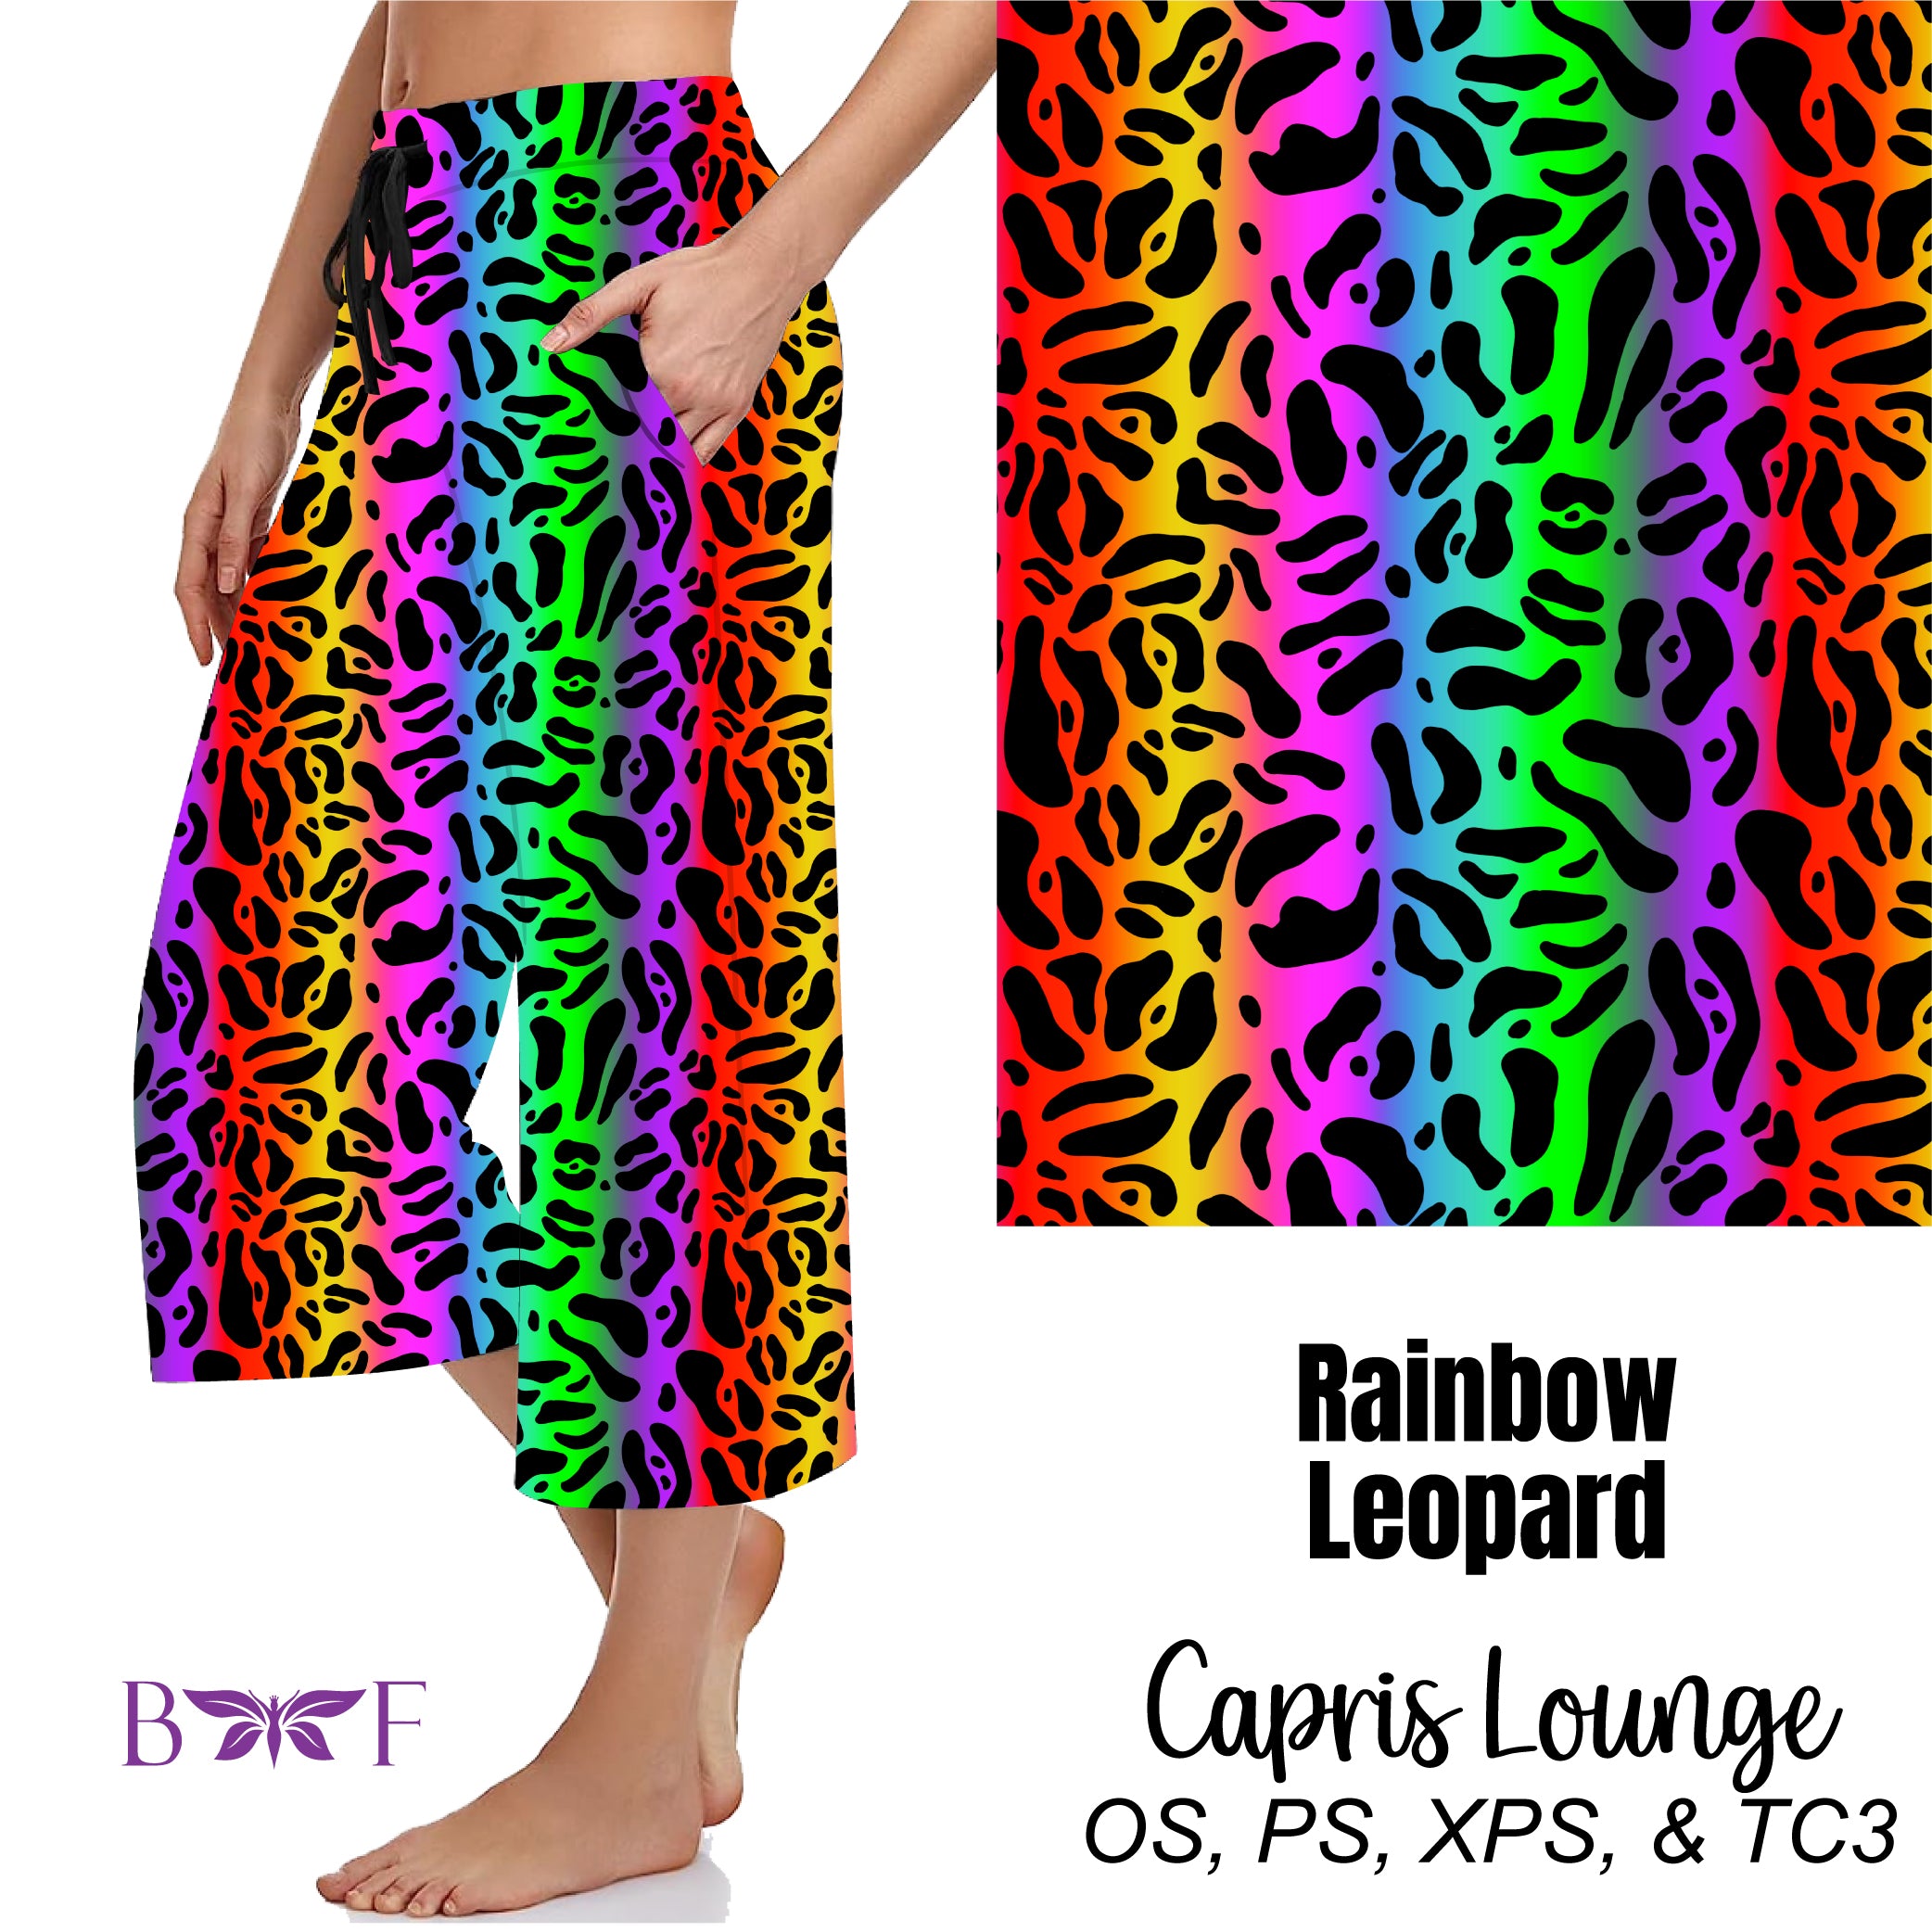 Rainbow Leopard Leggings, Capris, and Shorts